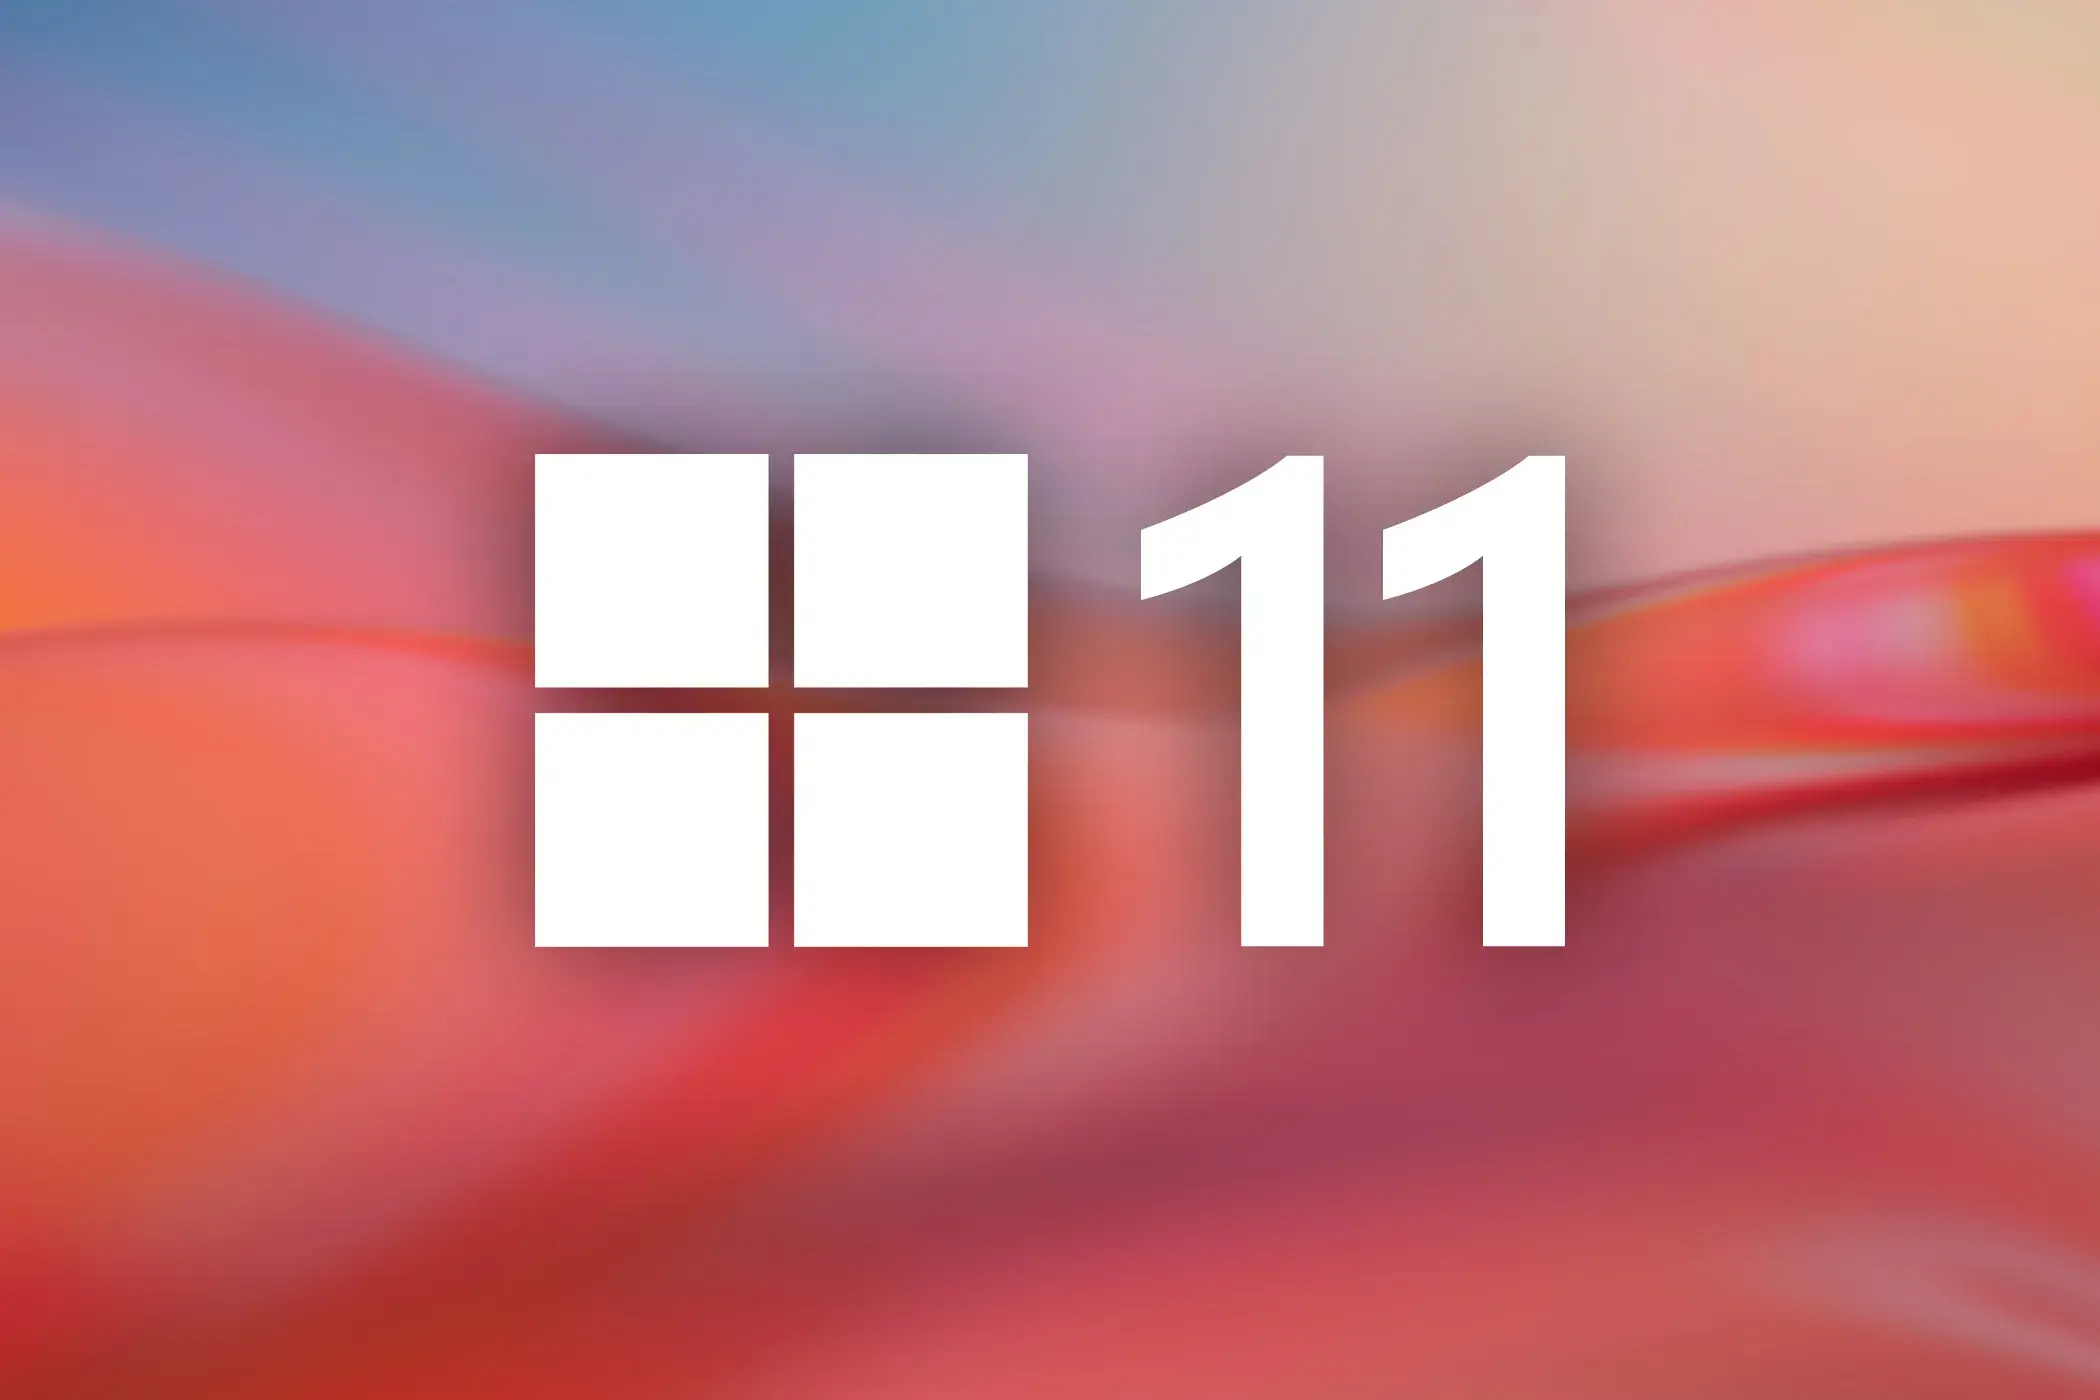 Windows 11 Text Copy Blur